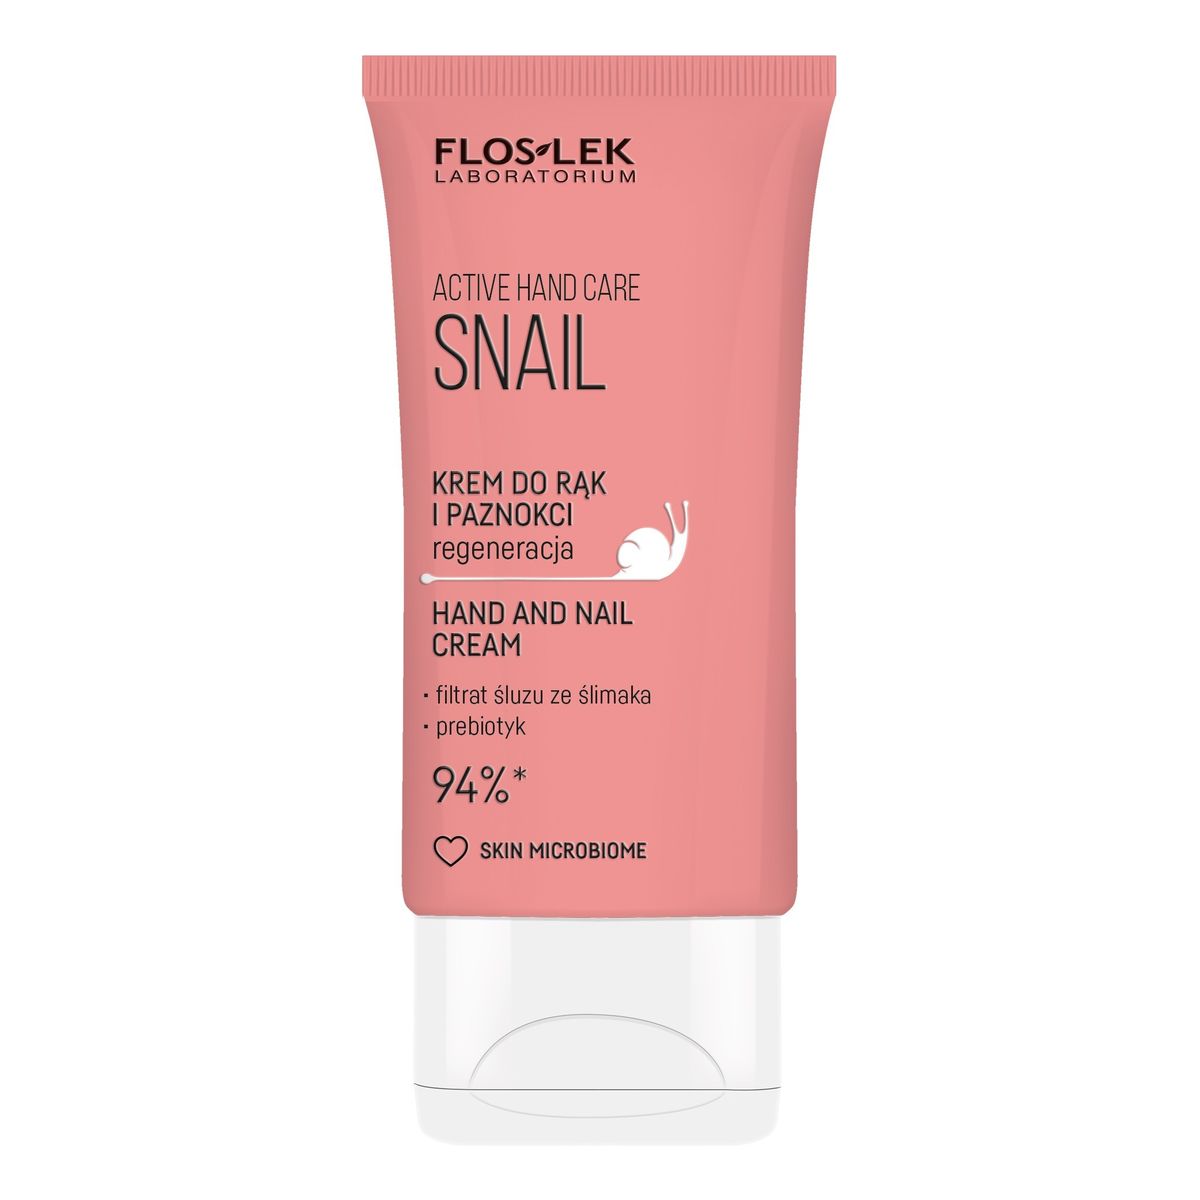 FlosLek Active Hand Care Snail Krem do rąk i paznokci-regeneracja 50 ml